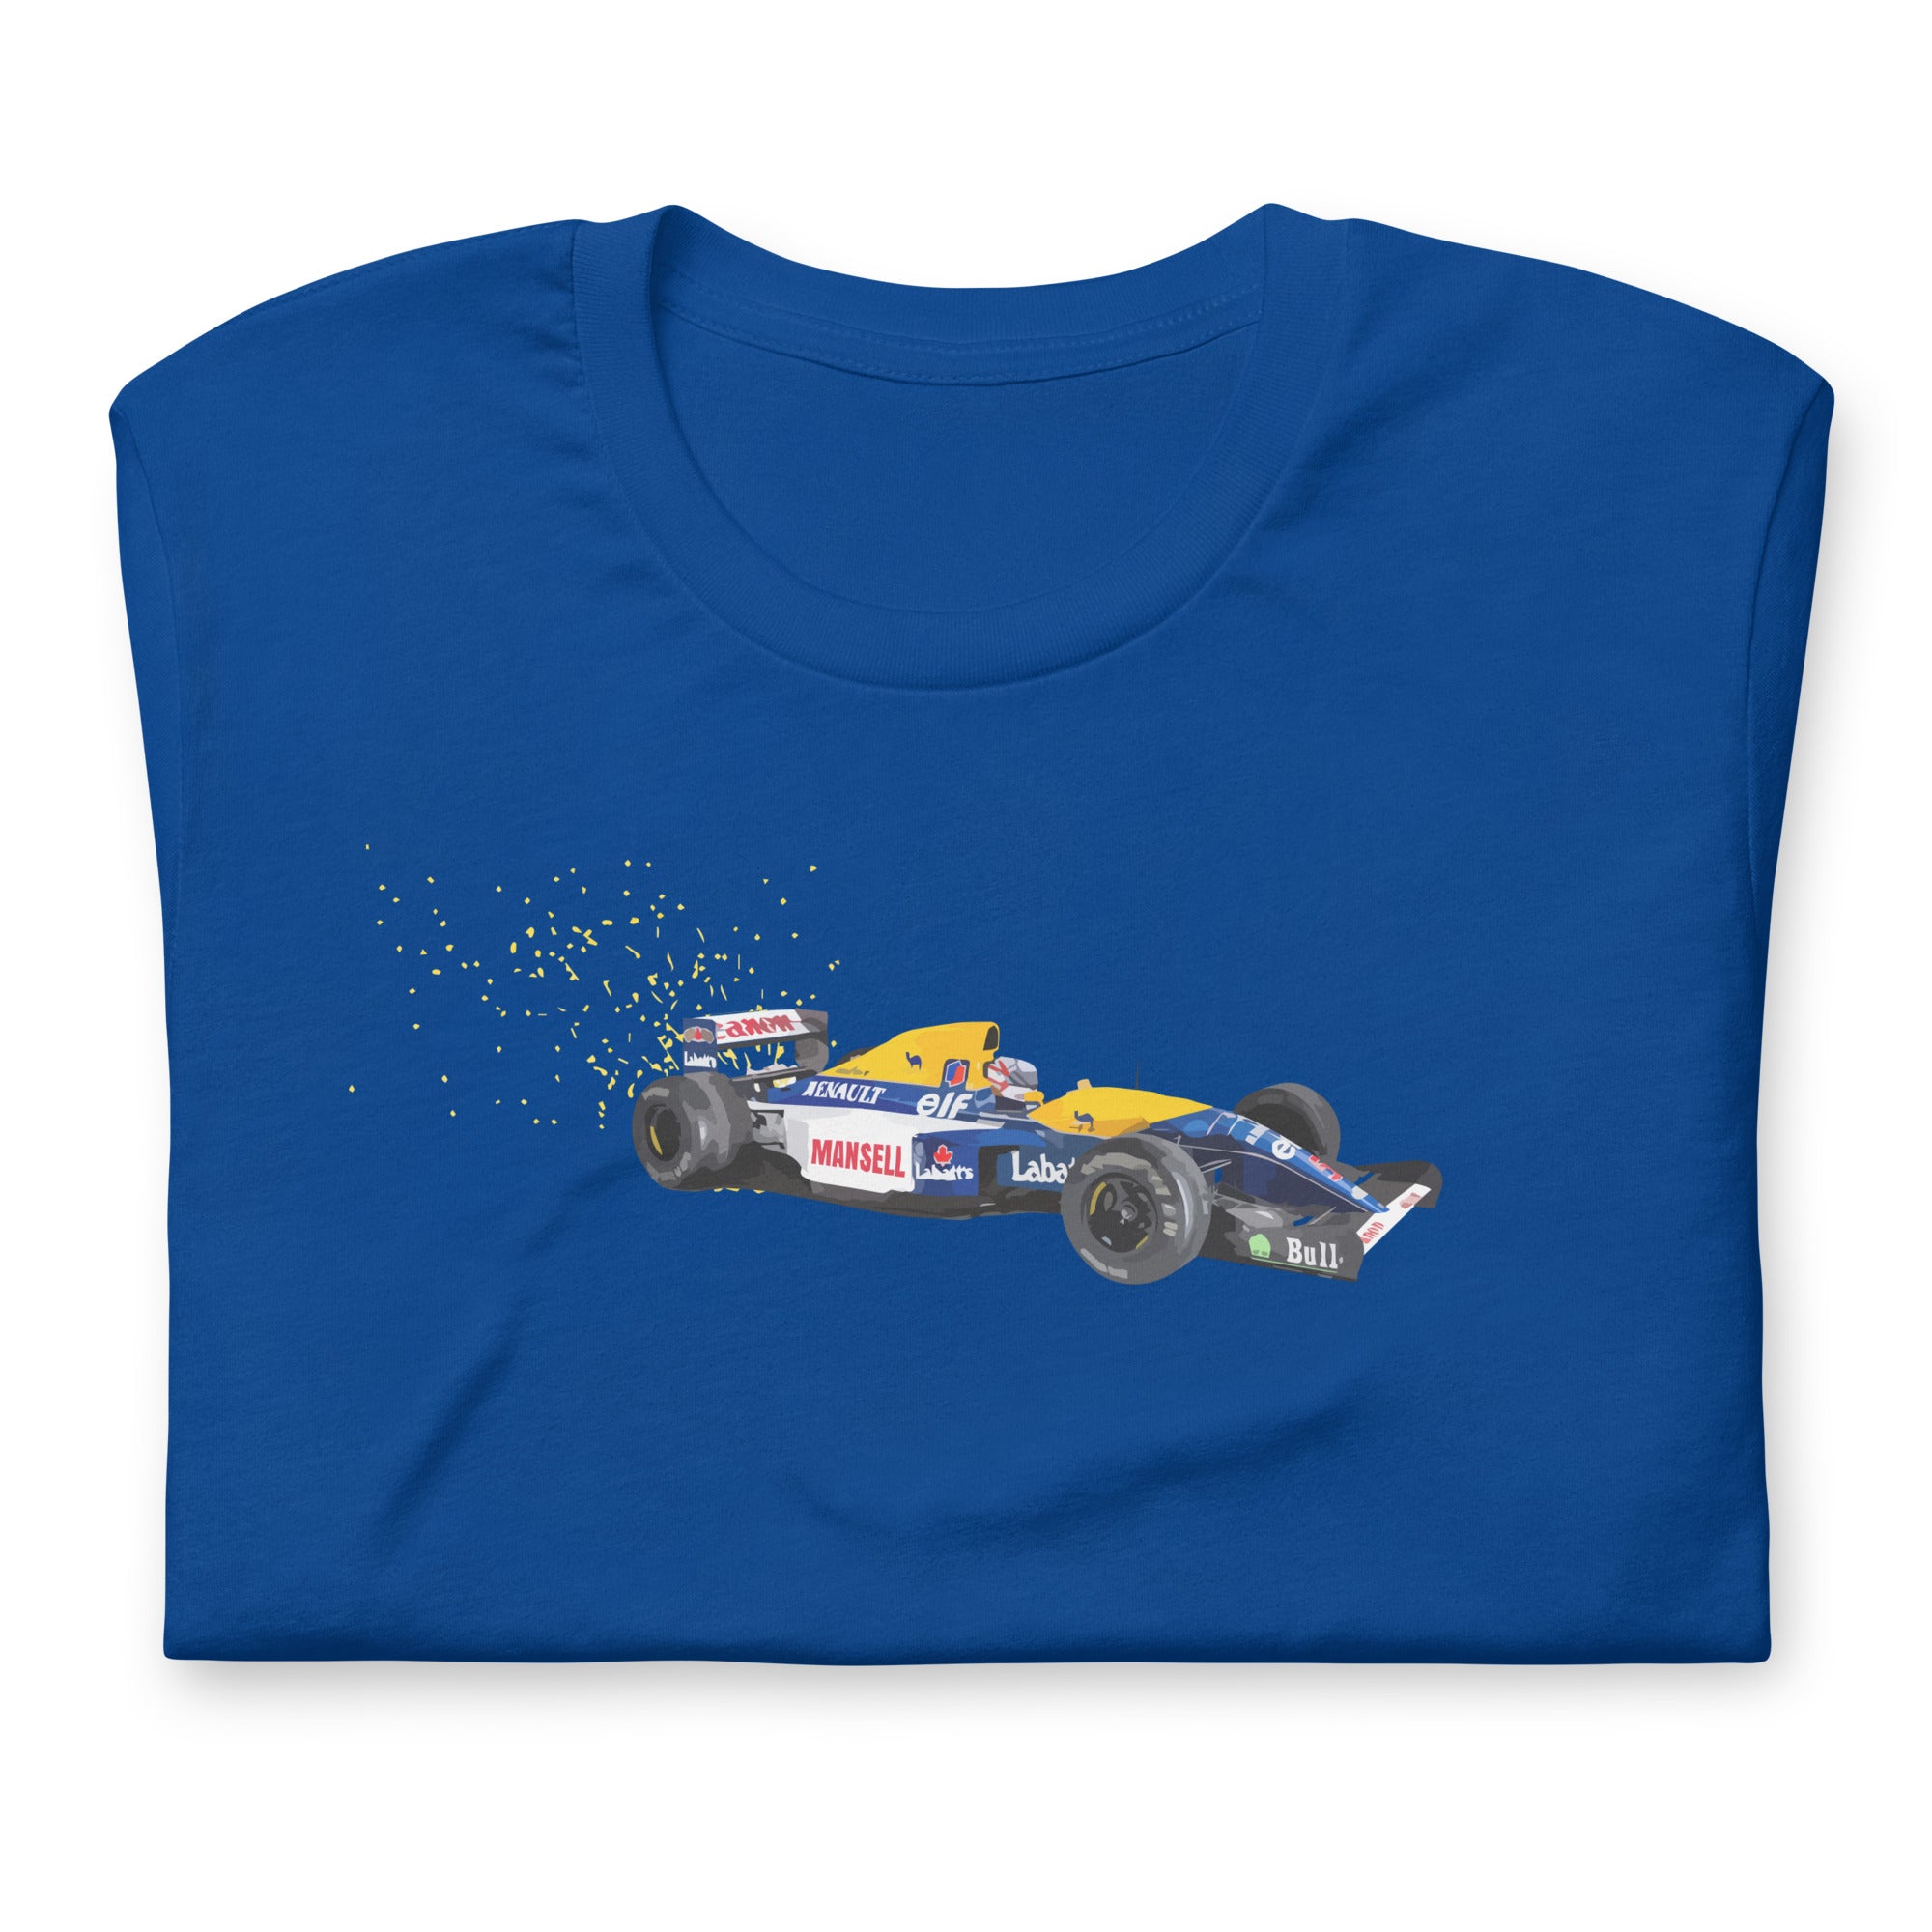 5: Nigel Mansell Williams FW14B F1 world champion blue tshirt front folded image